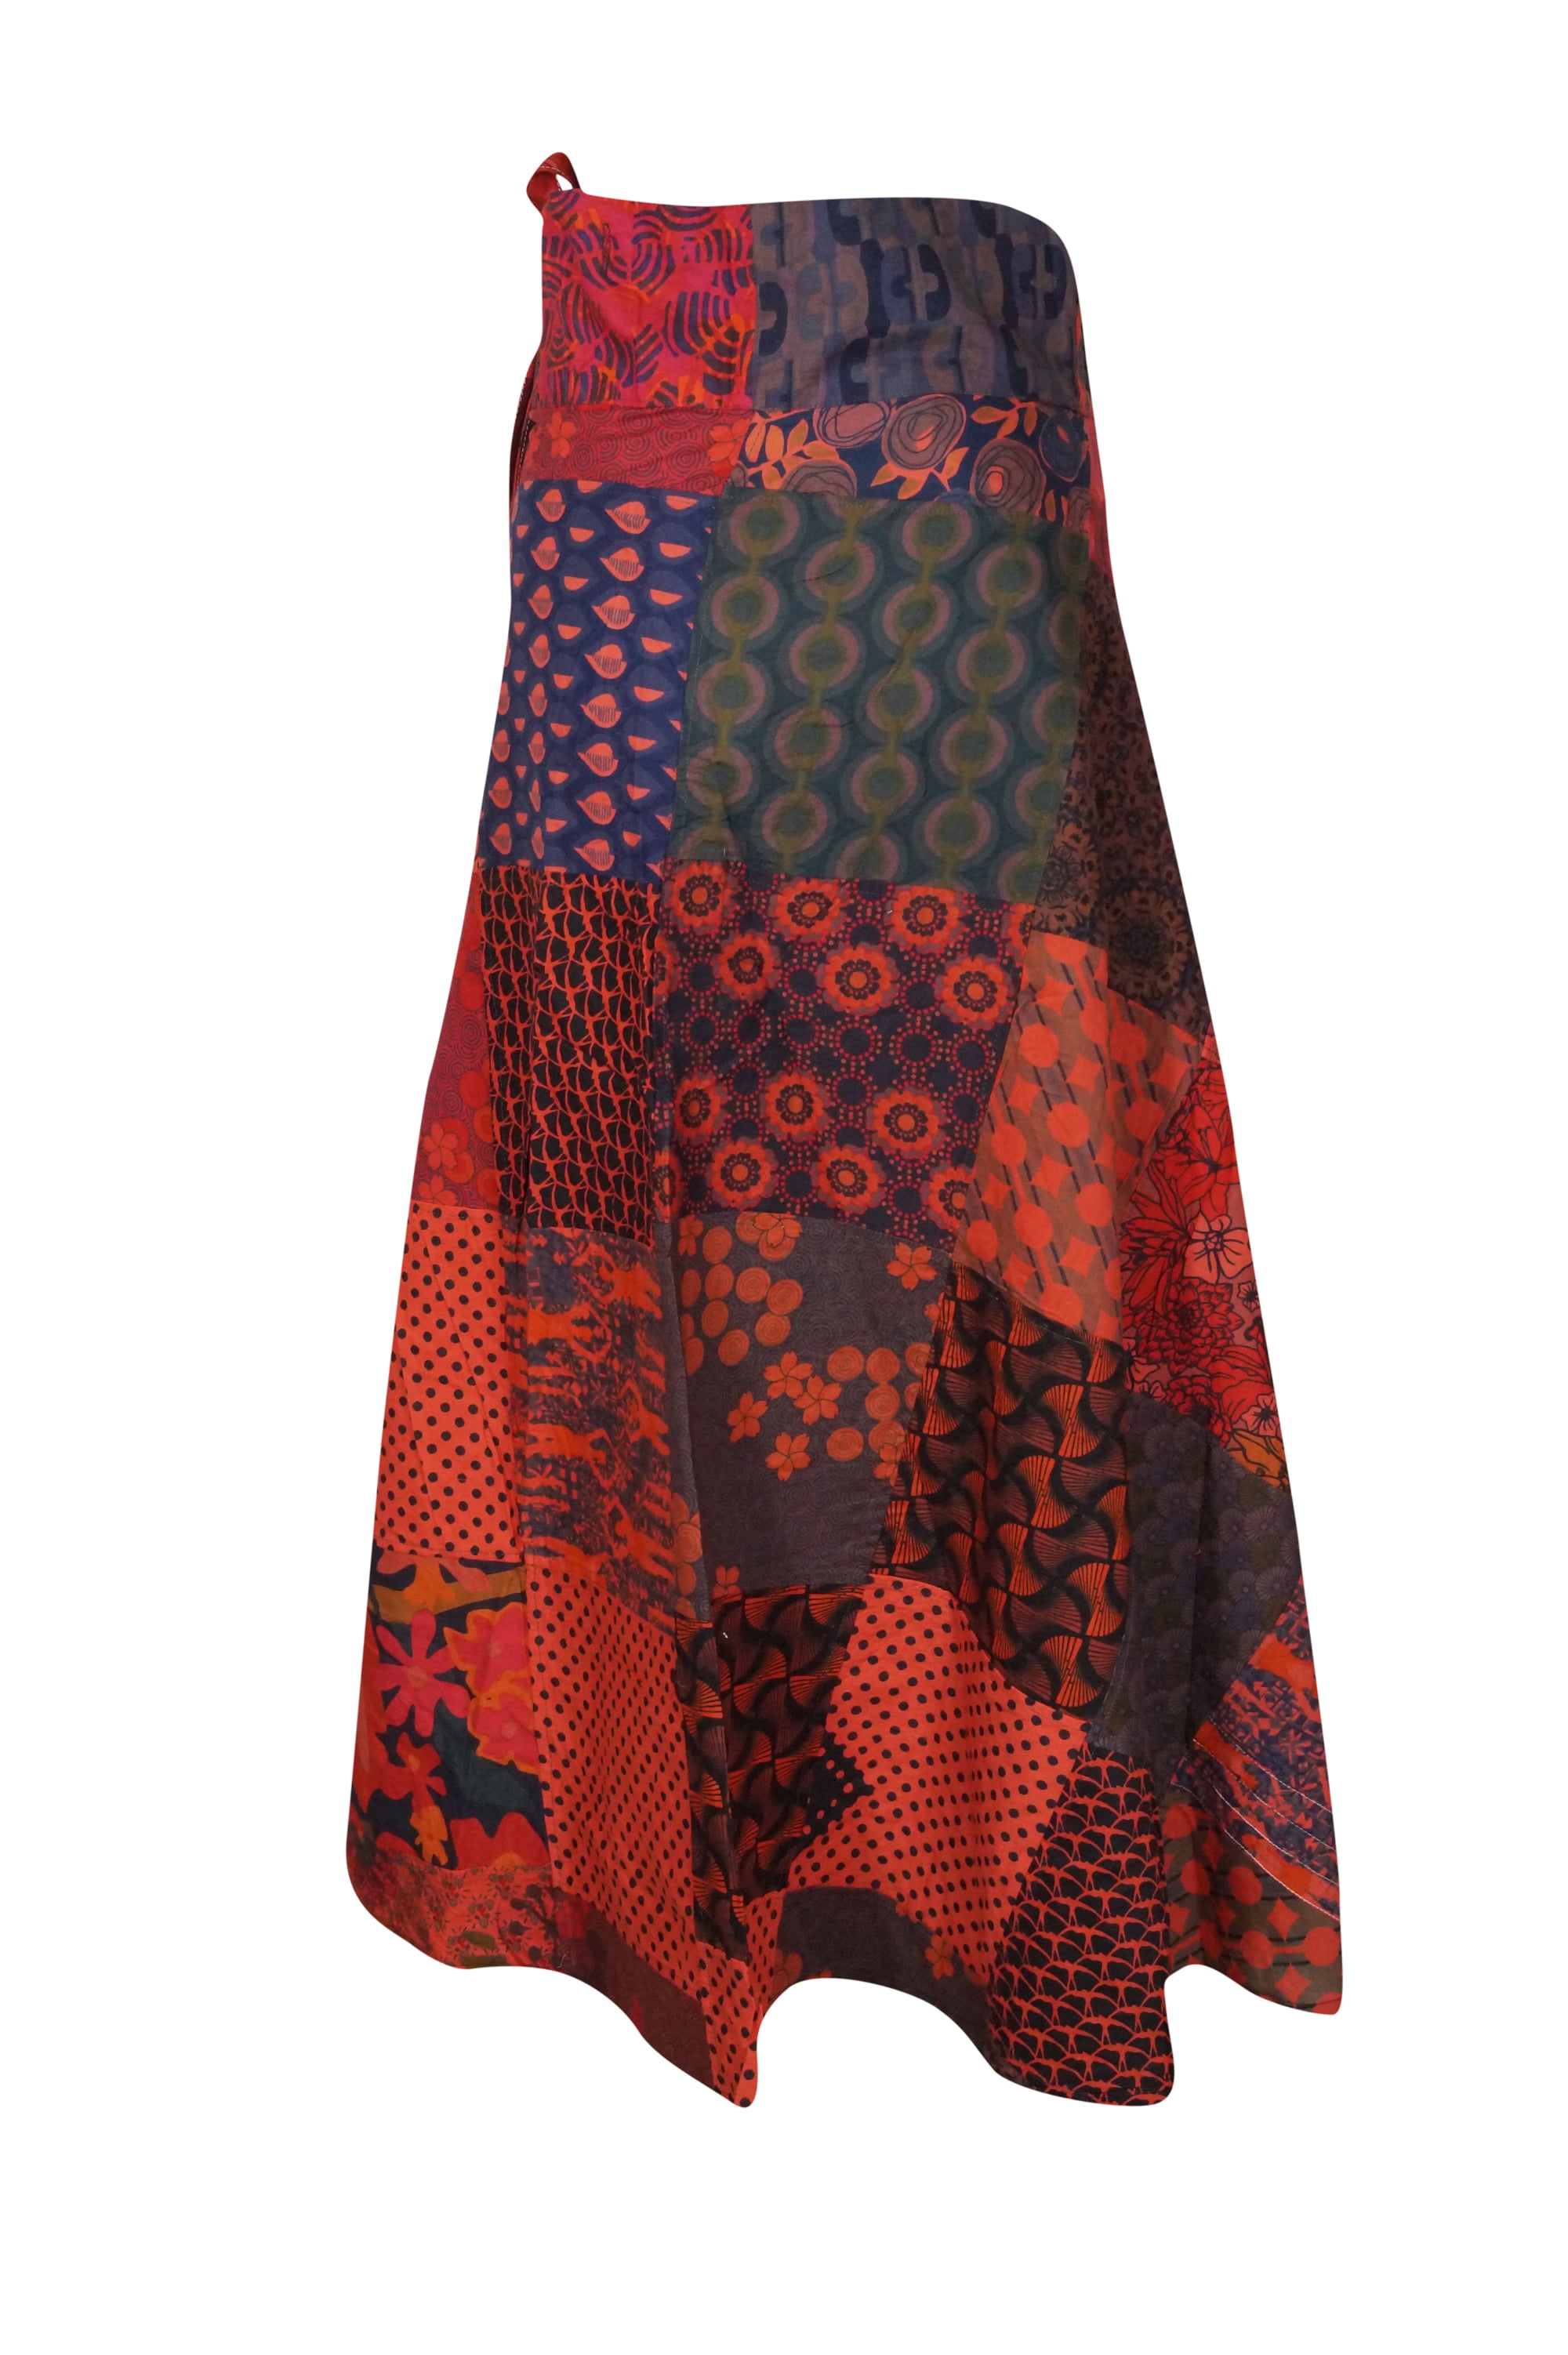 Indian Cotton Skirt Gift For Her Indian Maxi Skirt Long Skirts Cotton Wrap Skirt Birthday Gift Gift For Her